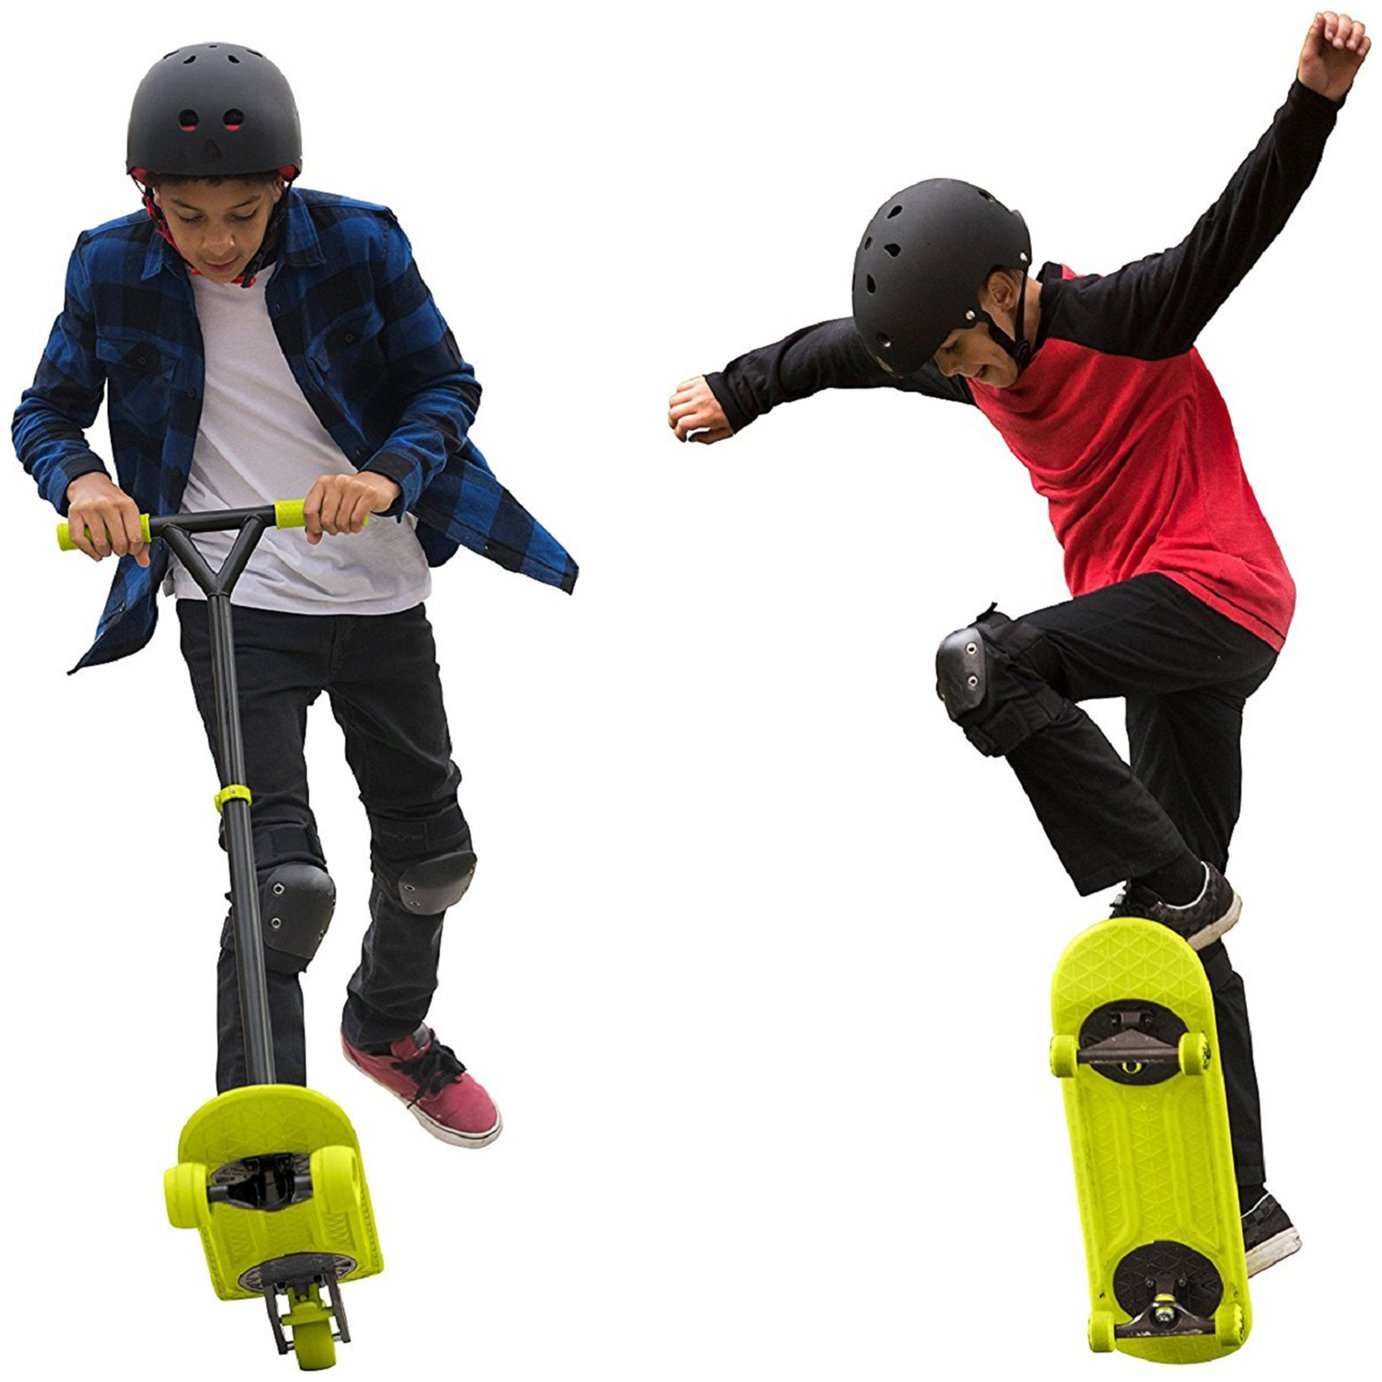 Skate bike. Скейтборд скутер MORFBOARD Skate & Scoot. Самокат трюковой детский Skate. Самокат ролики скейтборд. Мальчик на самокате.